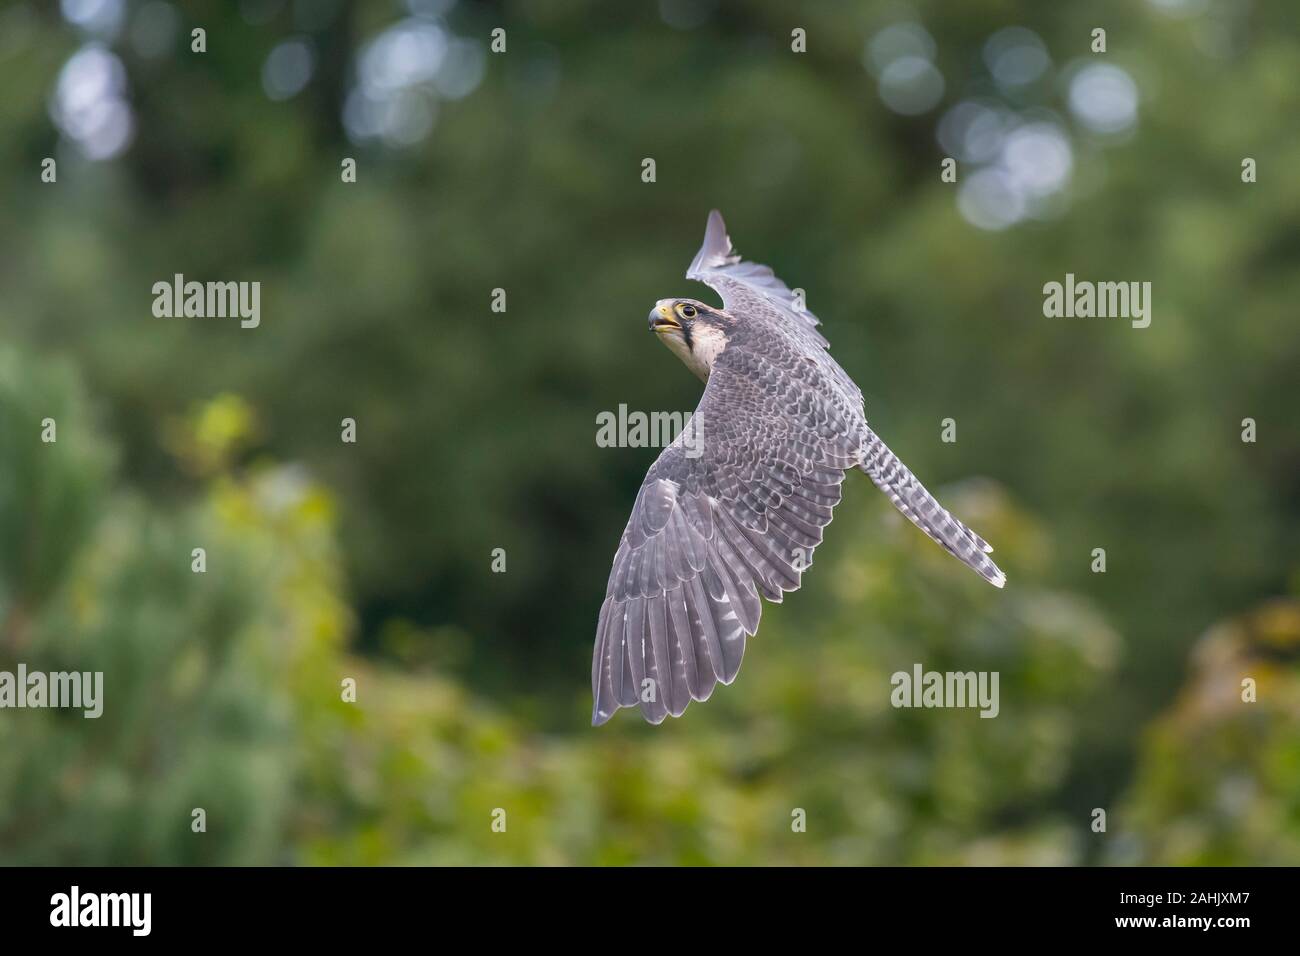 Lannerfalke im Flug, Falco biarmicus, Lanner falcon flying Stock Photo